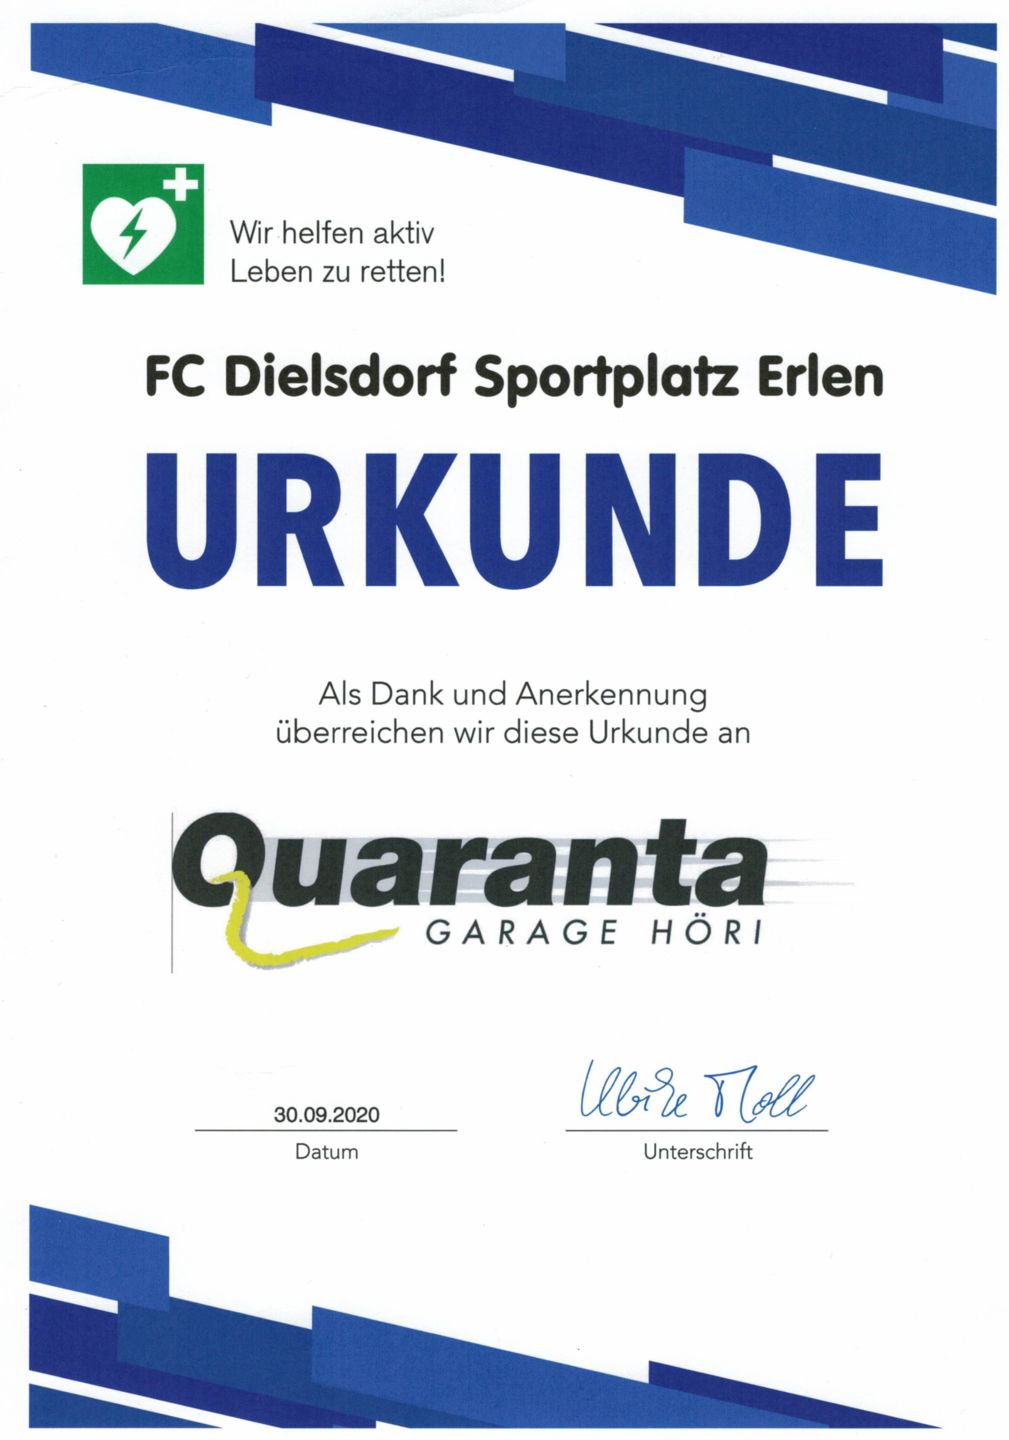 Garage Quaranta AG Sponsoring FC Dielsdorf